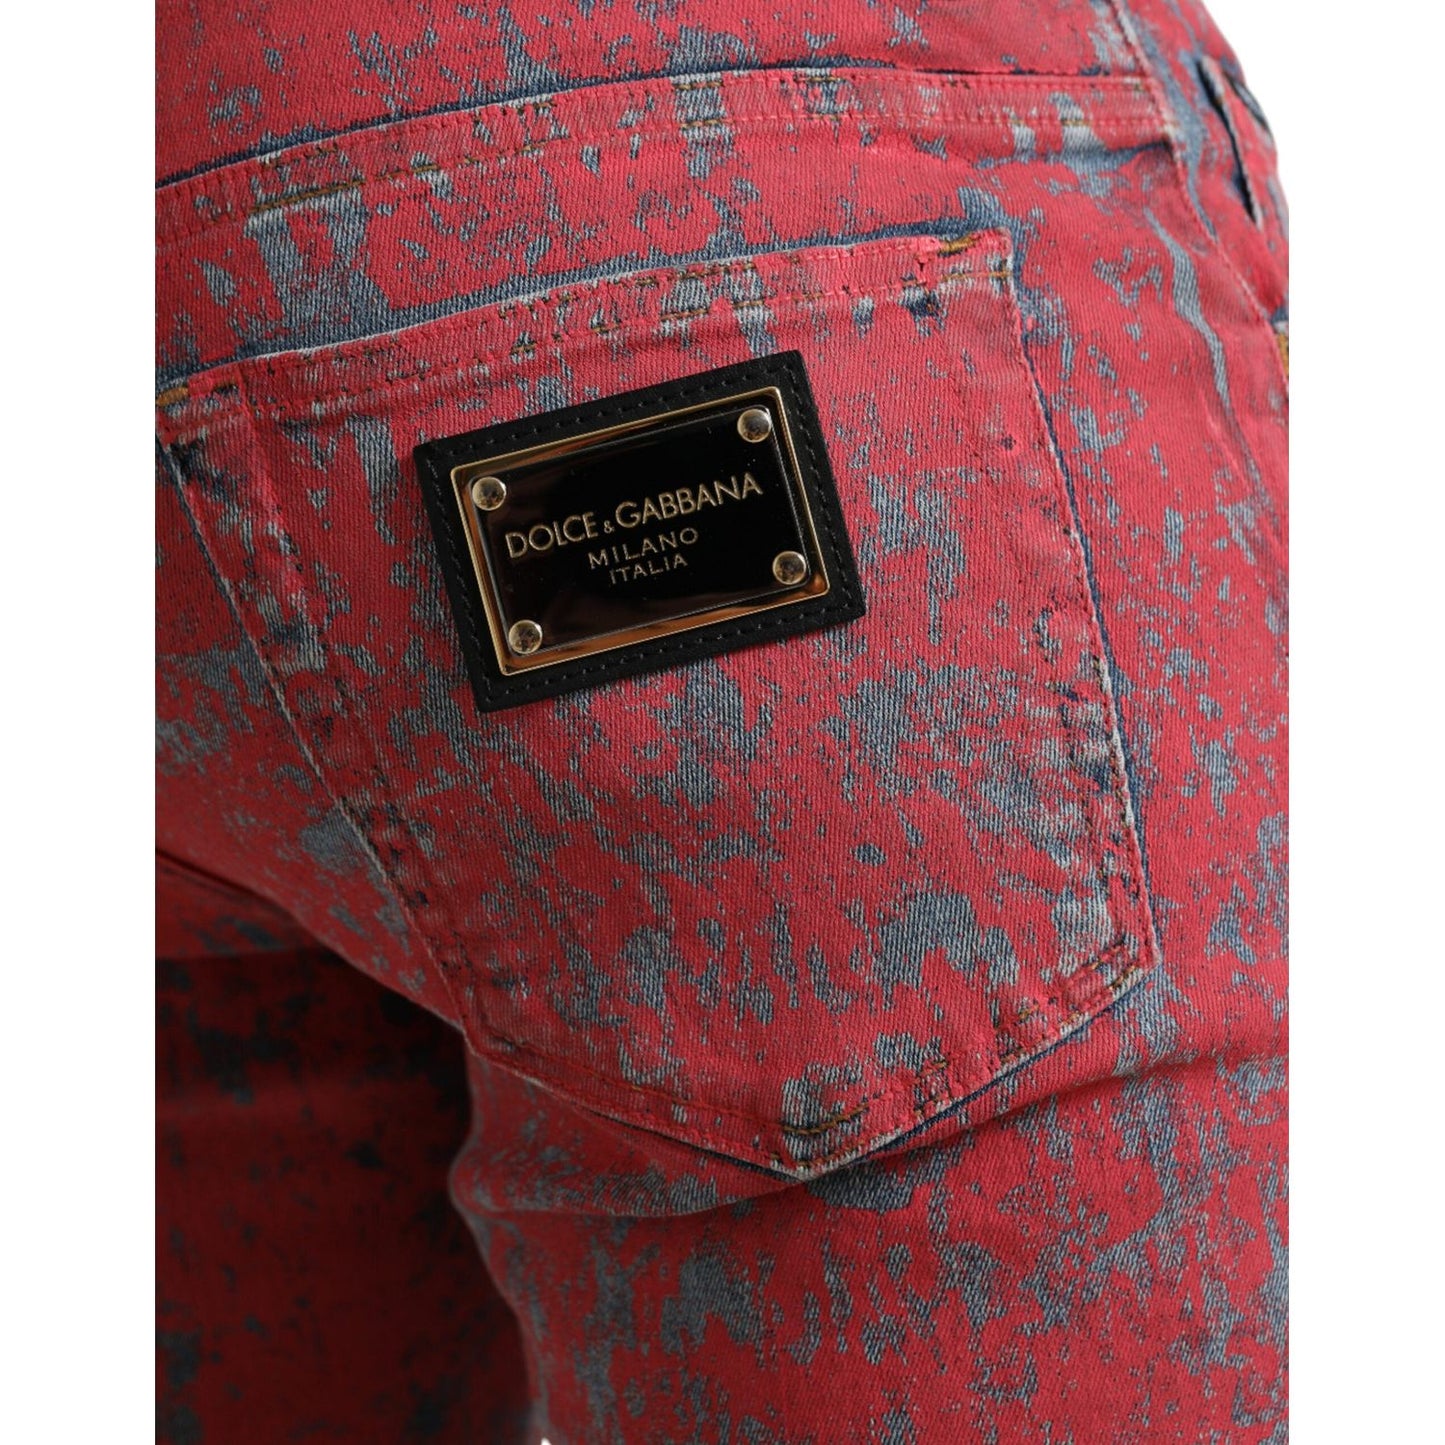 Dolce & Gabbana Red Tie Dye Skinny Denim Jeans red-cotton-dye-slim-fit-men-denim-jeans 465A8182-BG-scaled-c6ba6f0c-16c.jpg